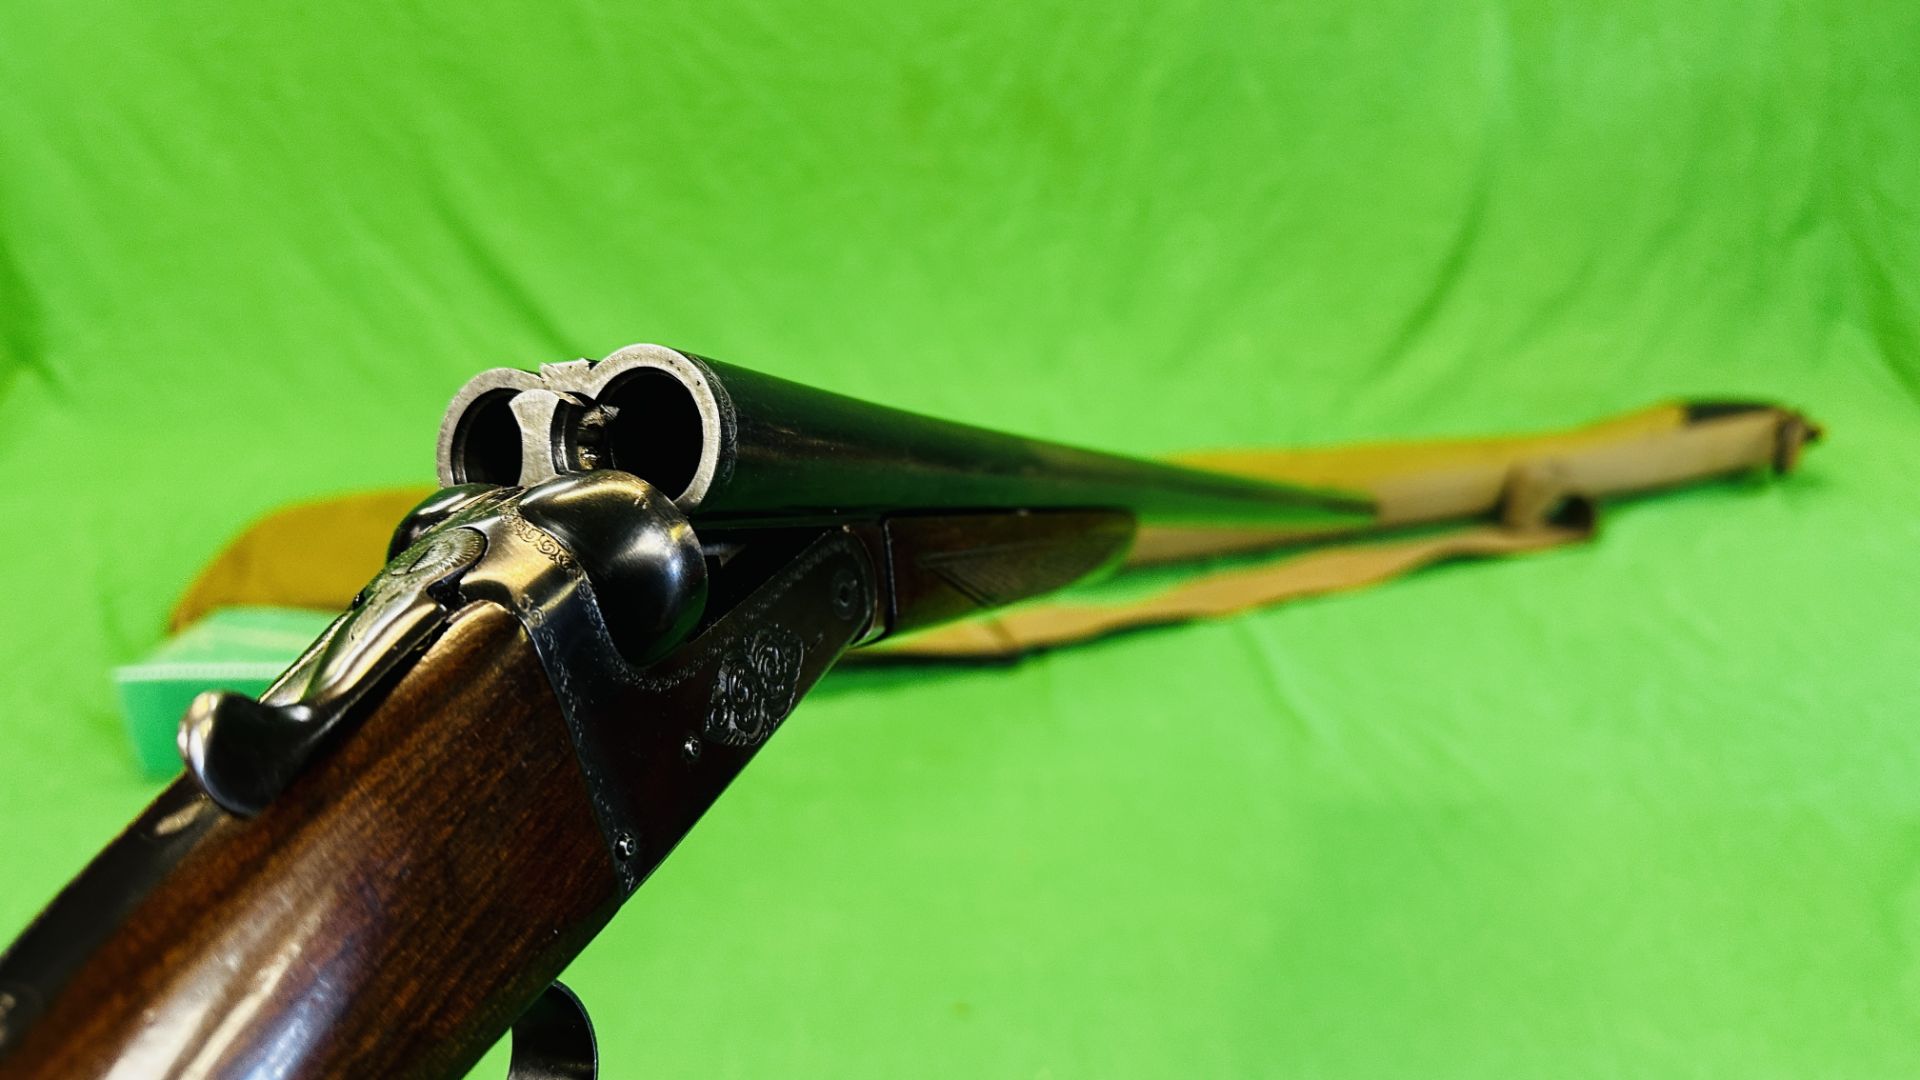 ZABALA 12 GAUGE SIDE BY SIDE SHOTGUN #192092 WITH GREEN PADDED GUN SLEEVE - (REF: 1452) - (ALL GUNS - Image 16 of 16